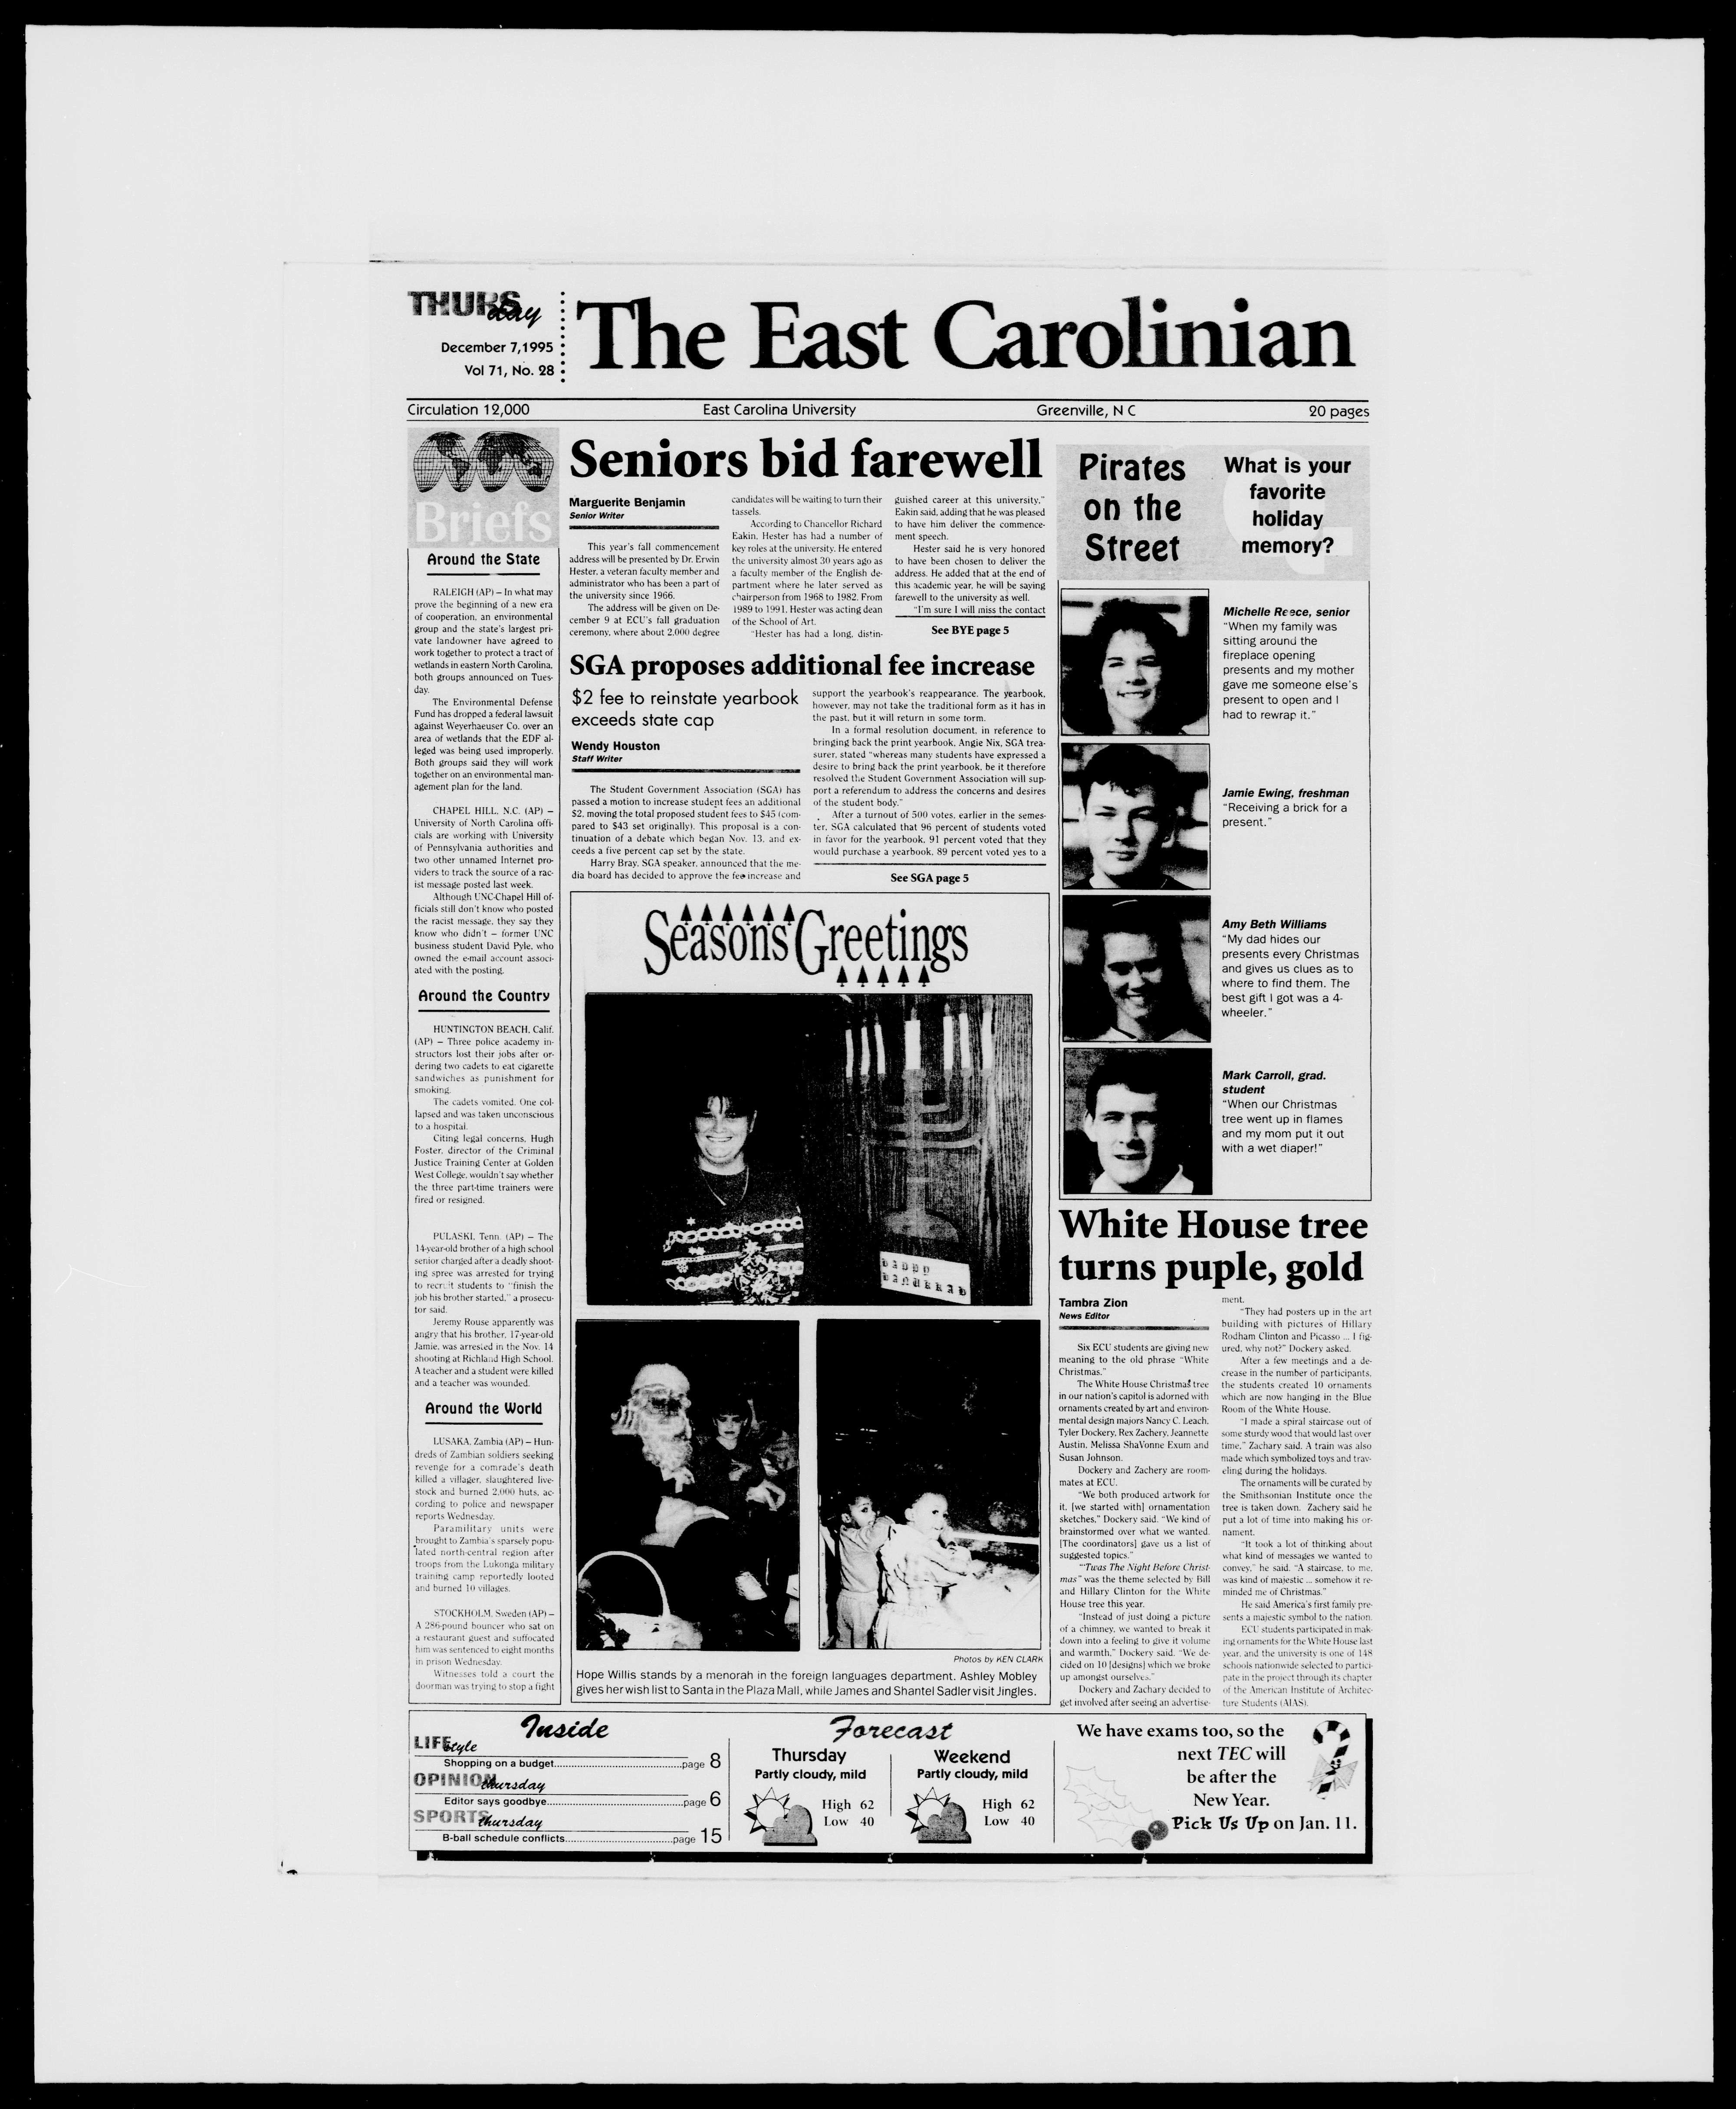 The East Carolinian, December 7, 1995